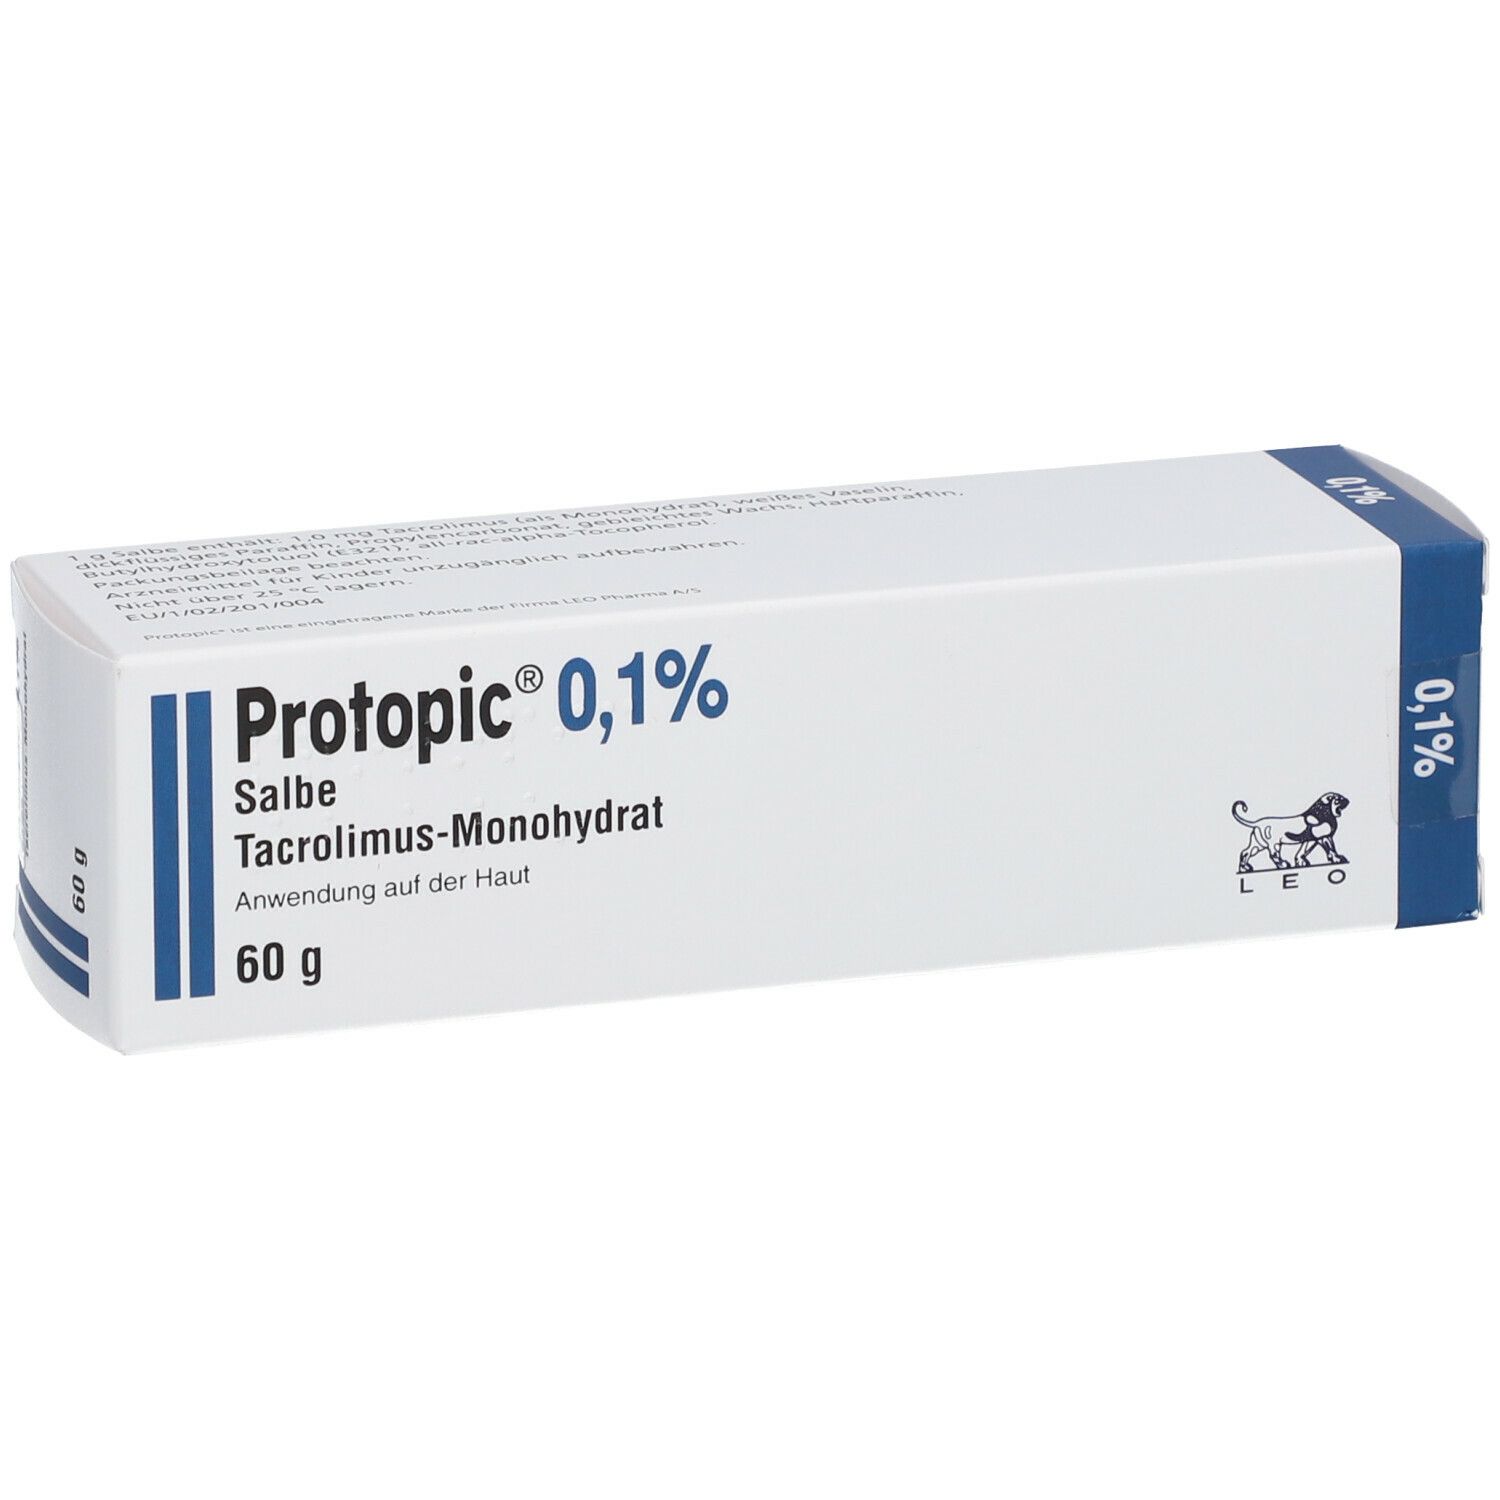 Protopic® 0,1% Salbe 60 g mit dem E-Rezept kaufen - SHOP APOTHEKE